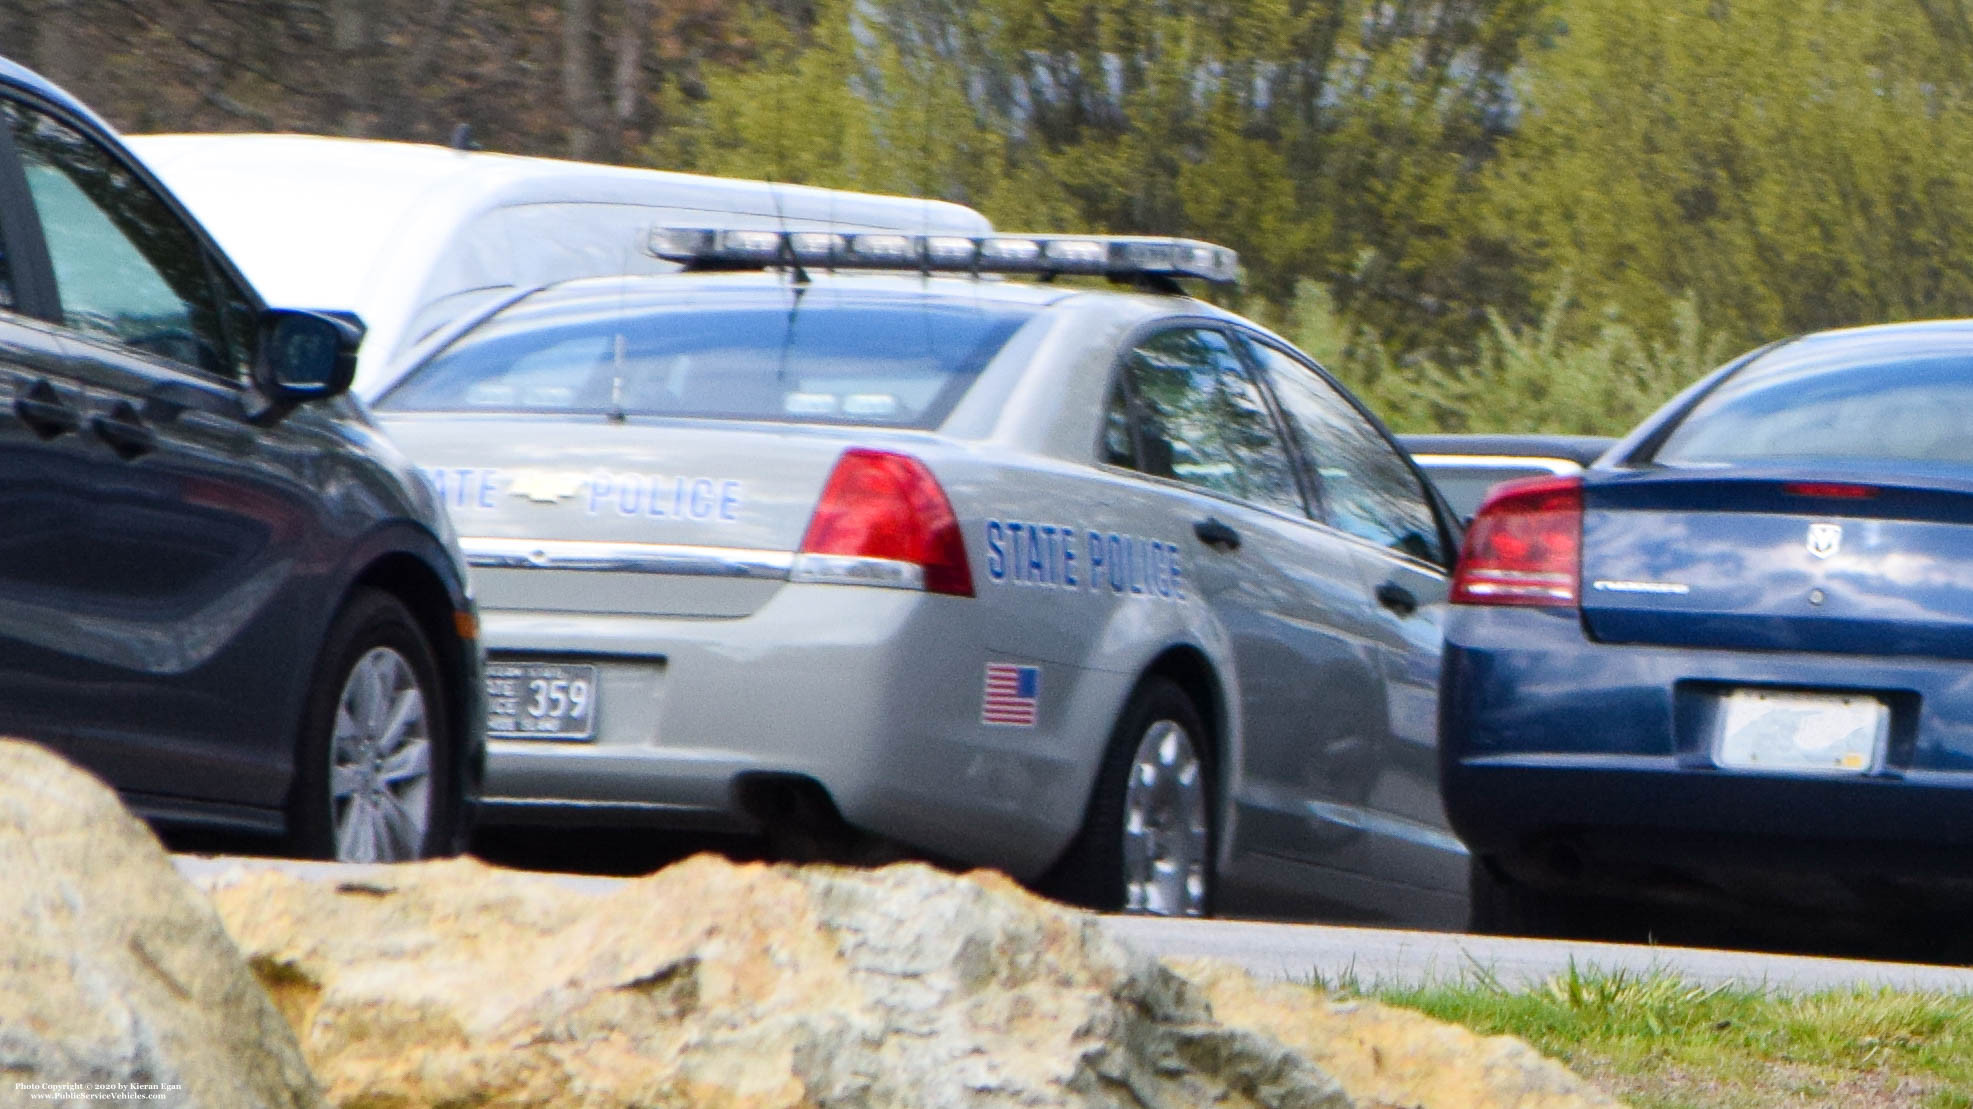 A photo  of Rhode Island State Police
            Cruiser 359, a 2013 Chevrolet Caprice             taken by Kieran Egan